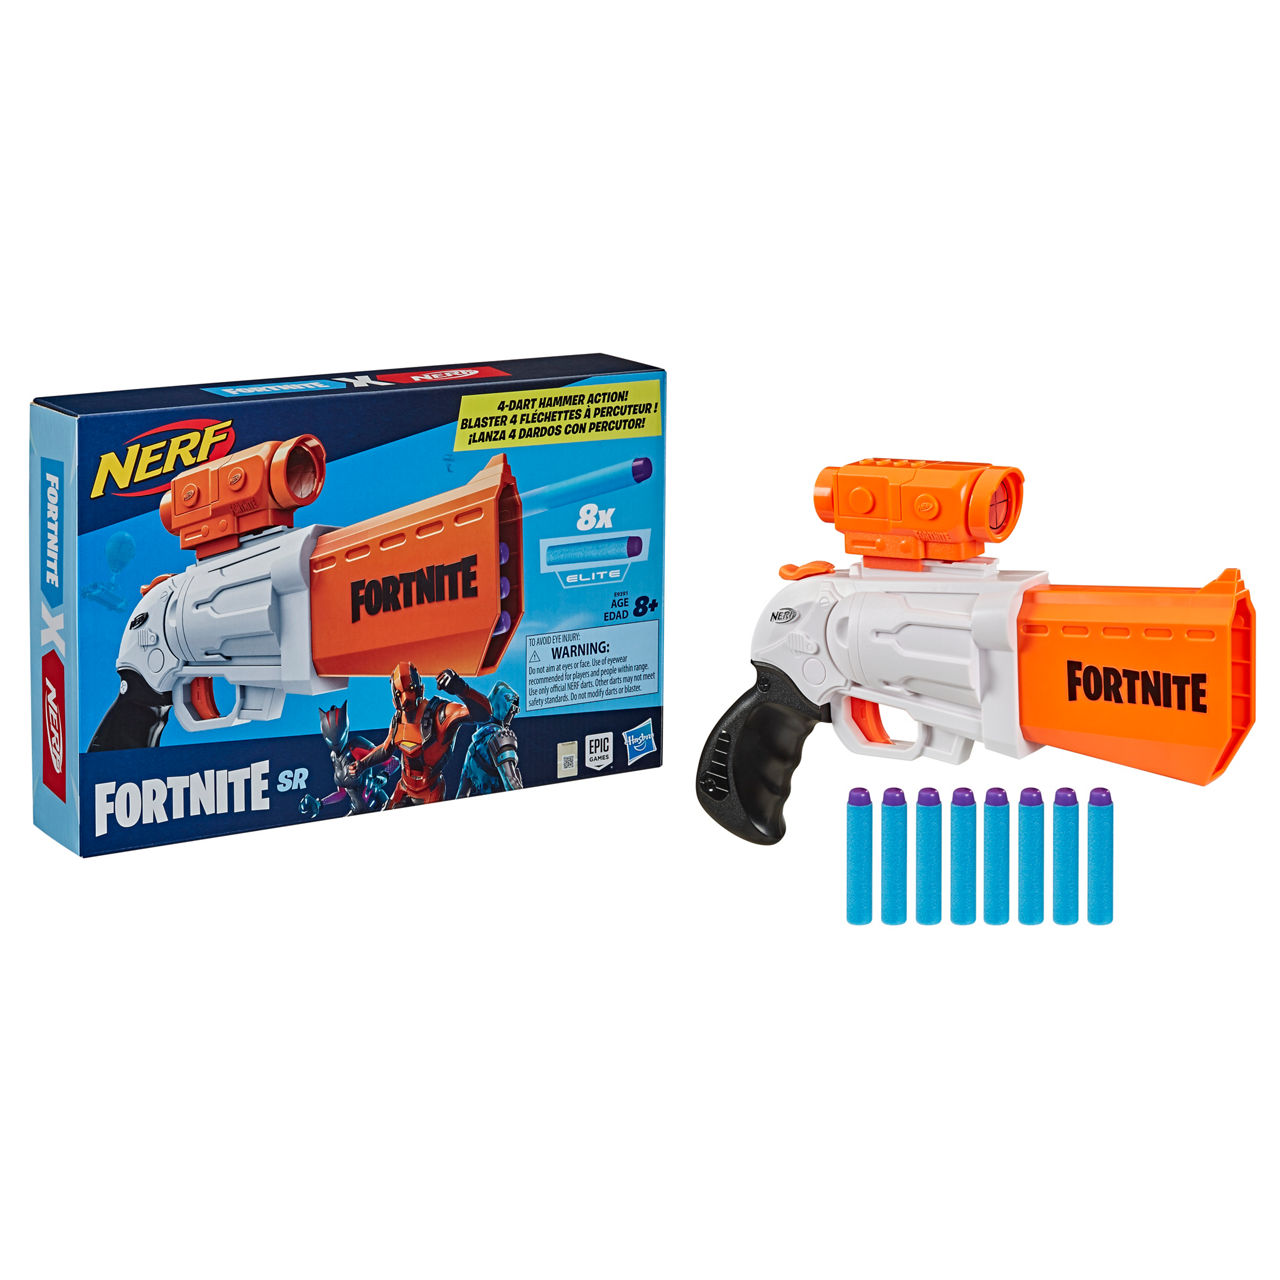 Nerf Fortnite SR Blaster | Big Lots